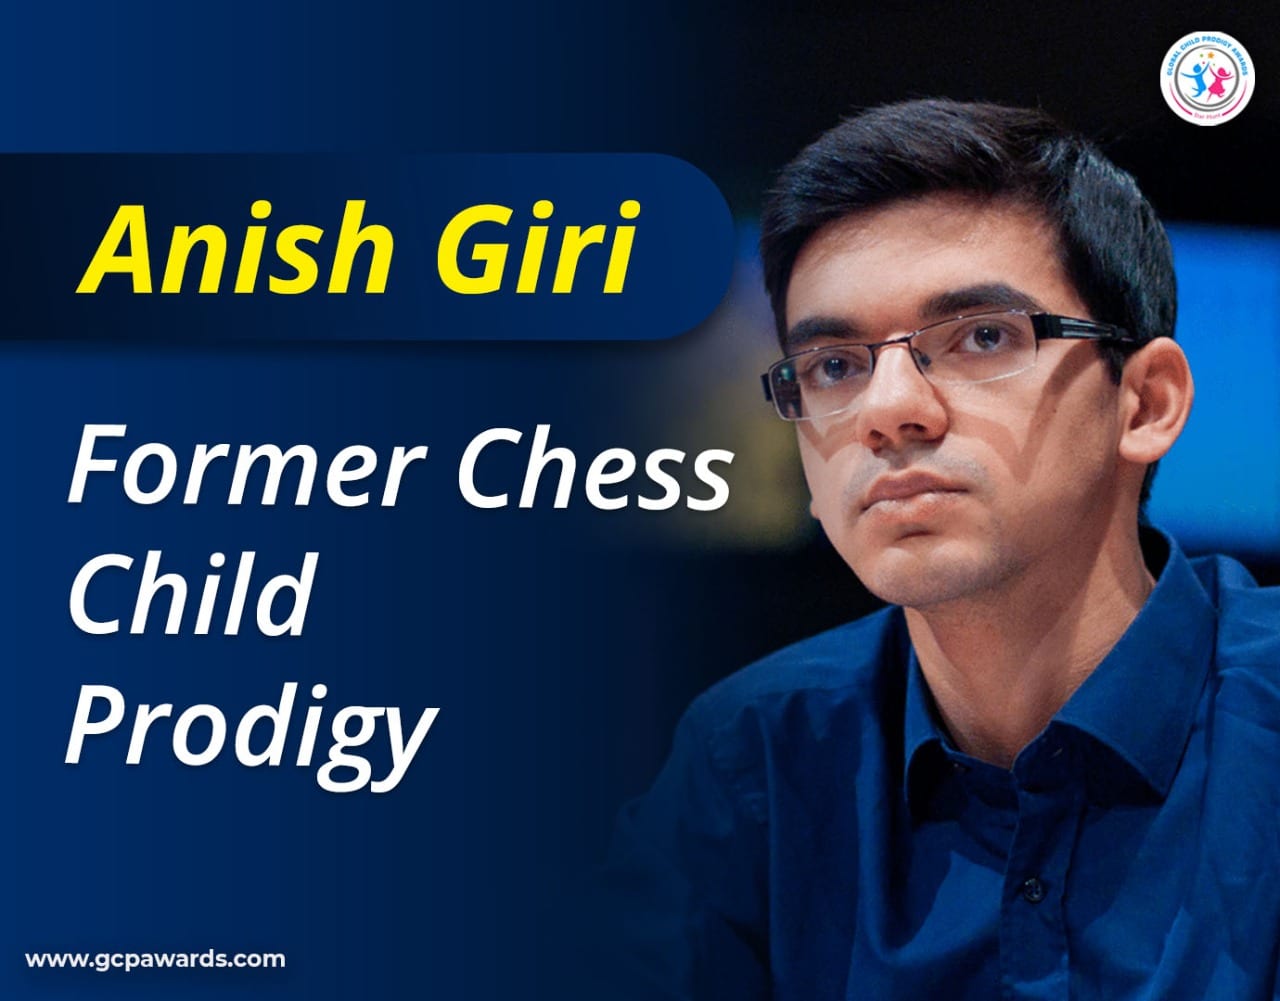 Anish Giri - Wikipedia